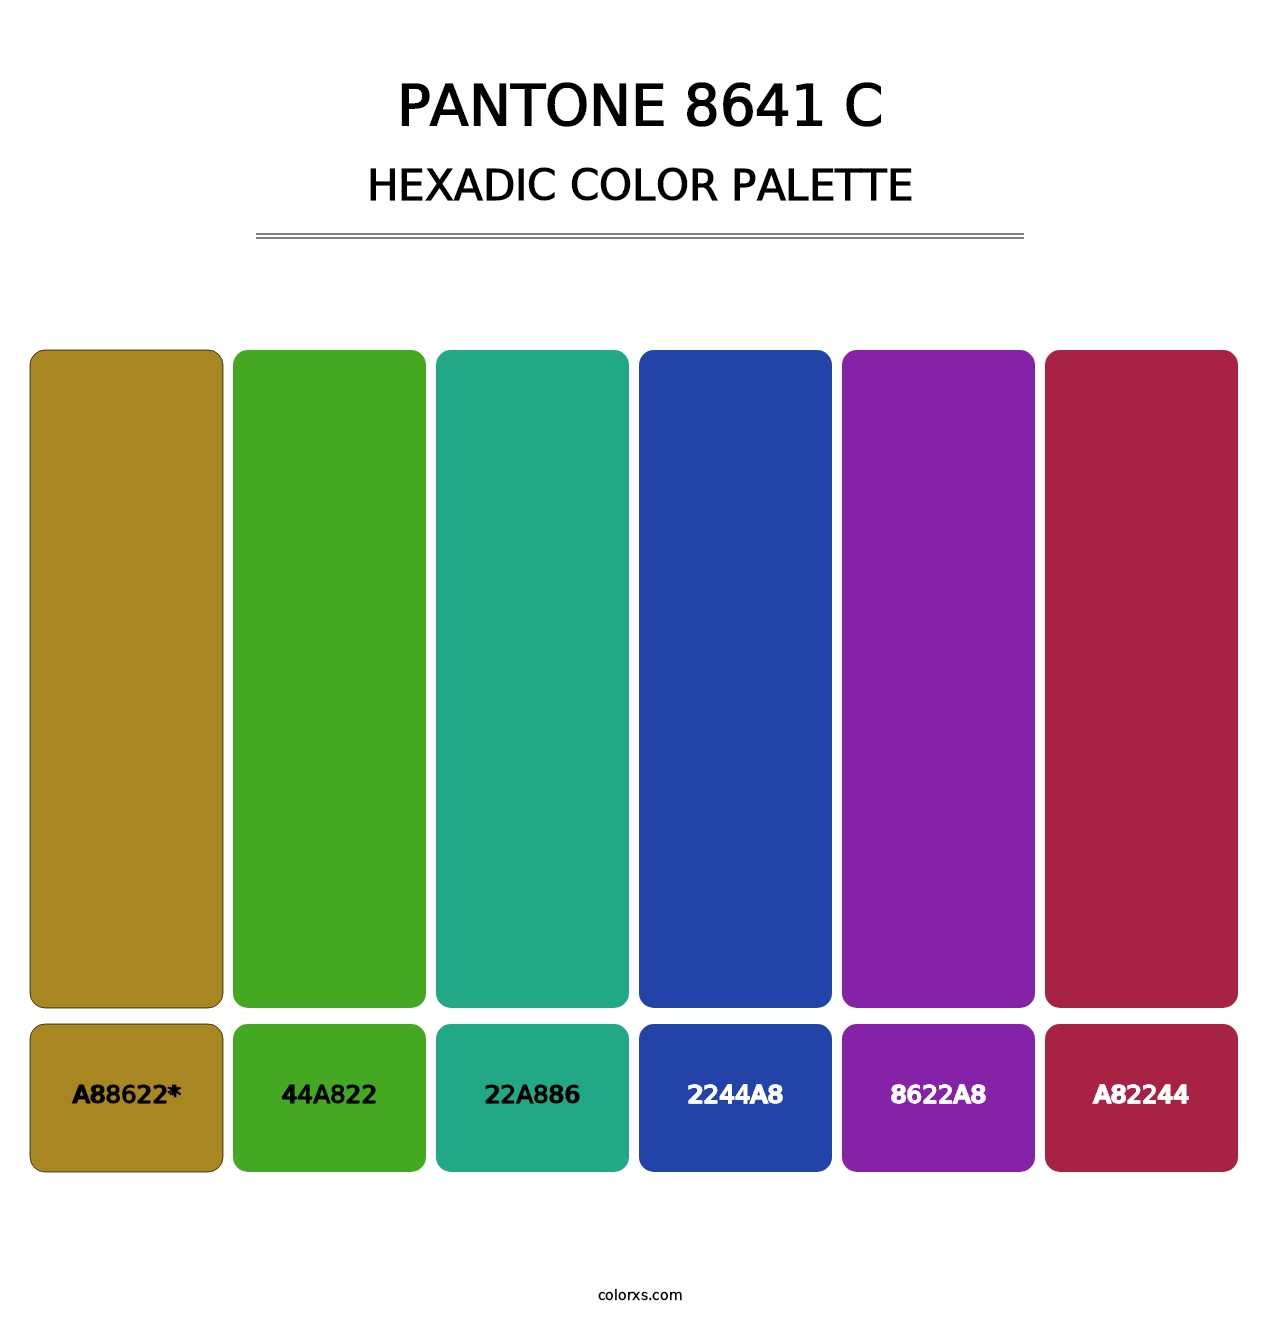 PANTONE 8641 C - Hexadic Color Palette